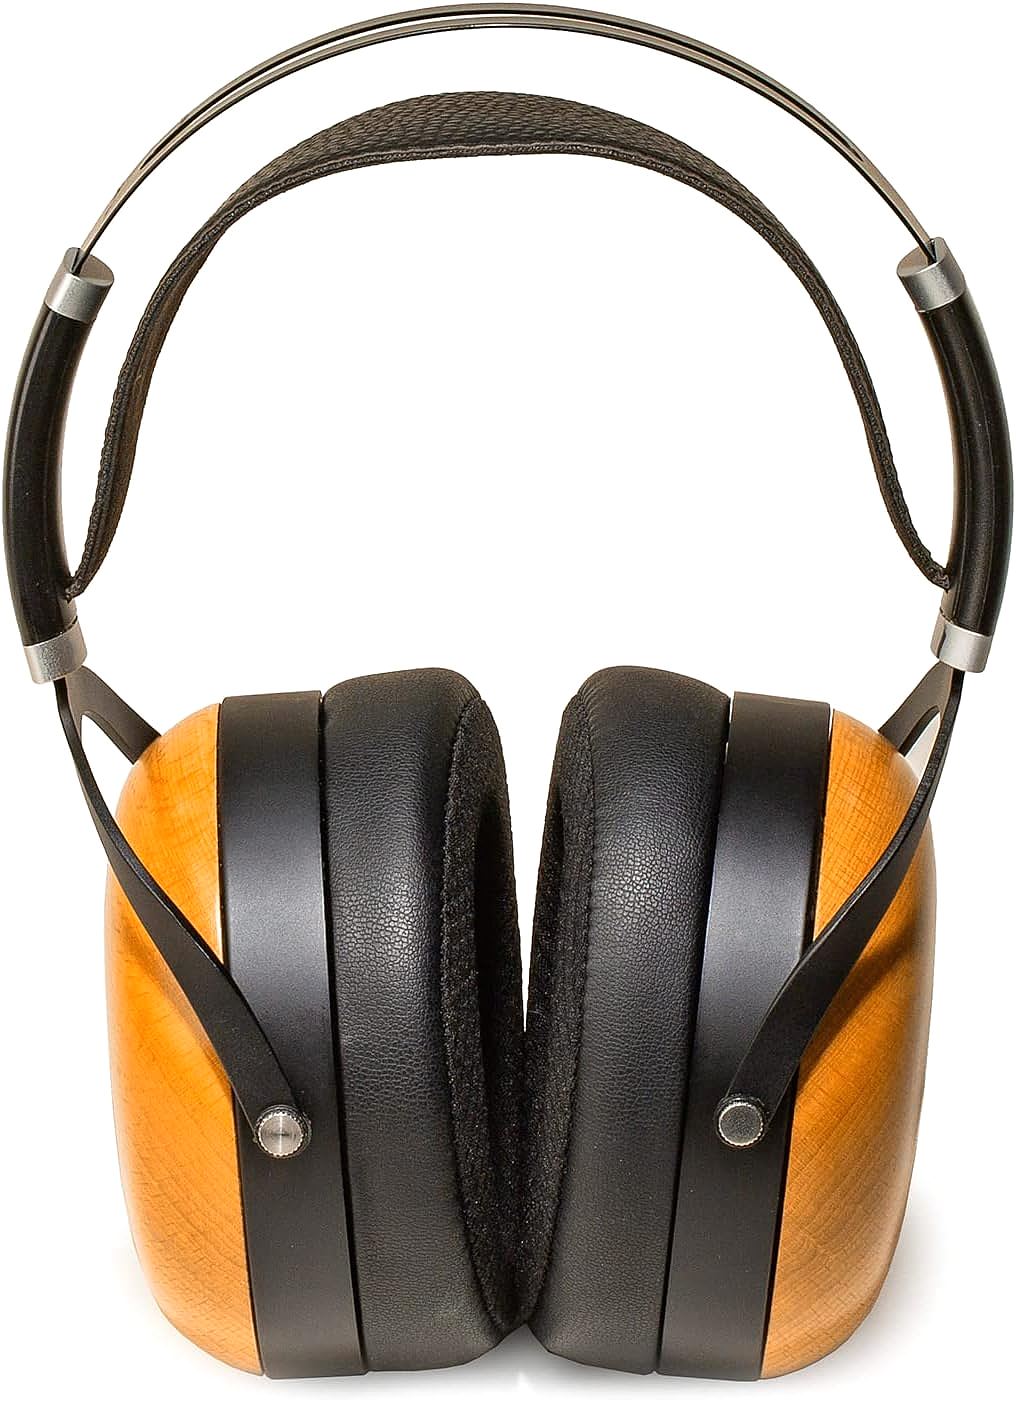  HIFIMAN SUNDARA Closed-Back Over-Ear Planar Magnetic Wired Hi-Fi Headphones 